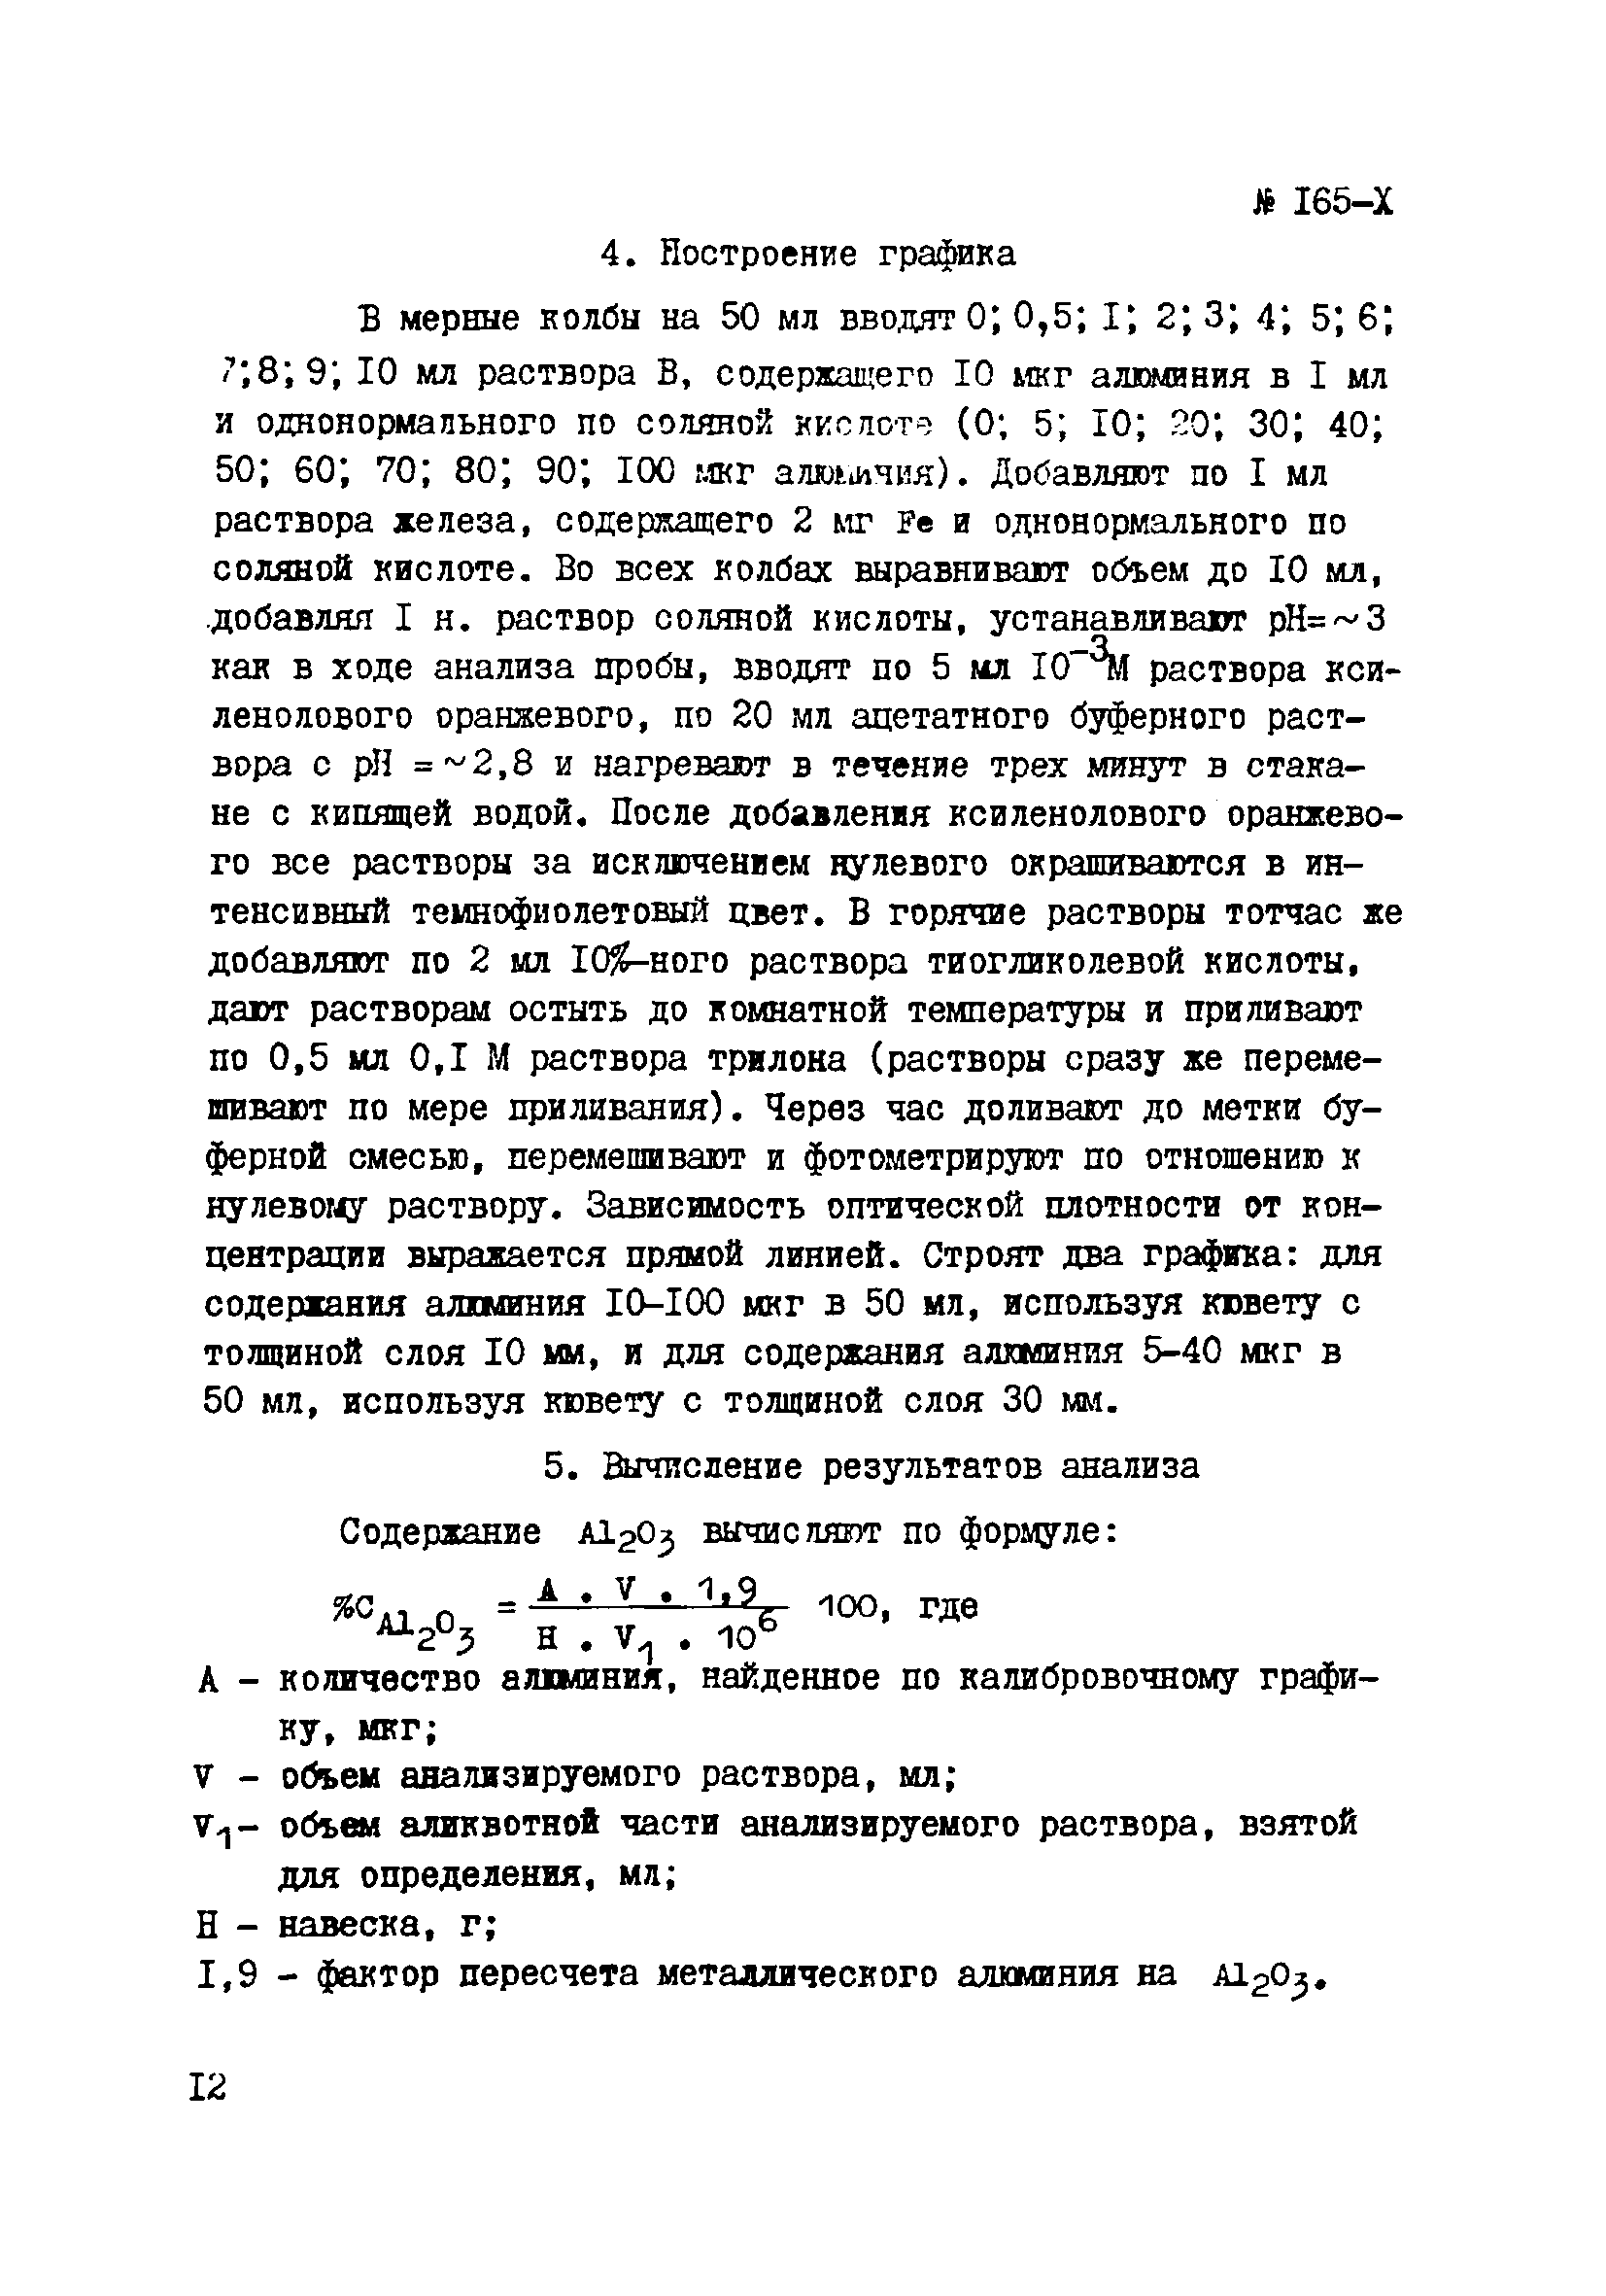 Инструкция НСАМ 165-Х